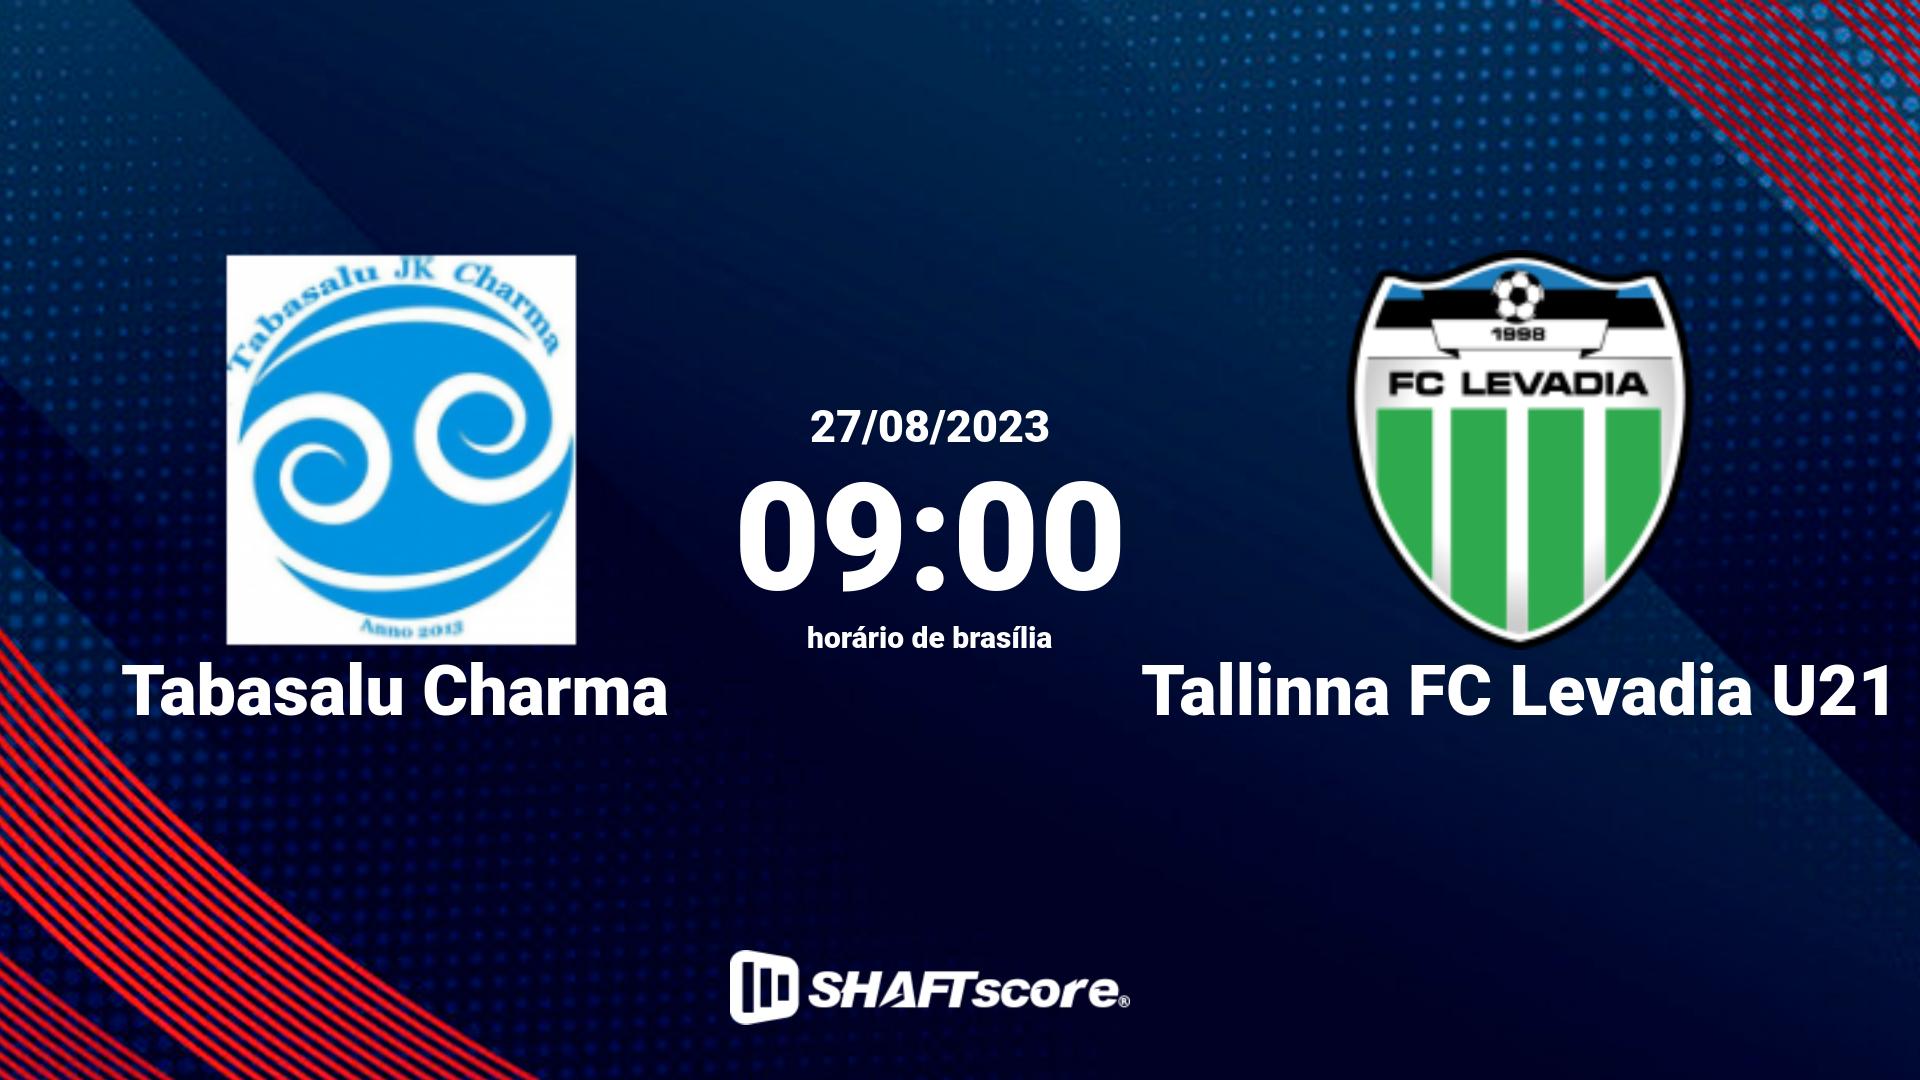 Estatísticas do jogo Tabasalu Charma vs Tallinna FC Levadia U21 27.08 09:00